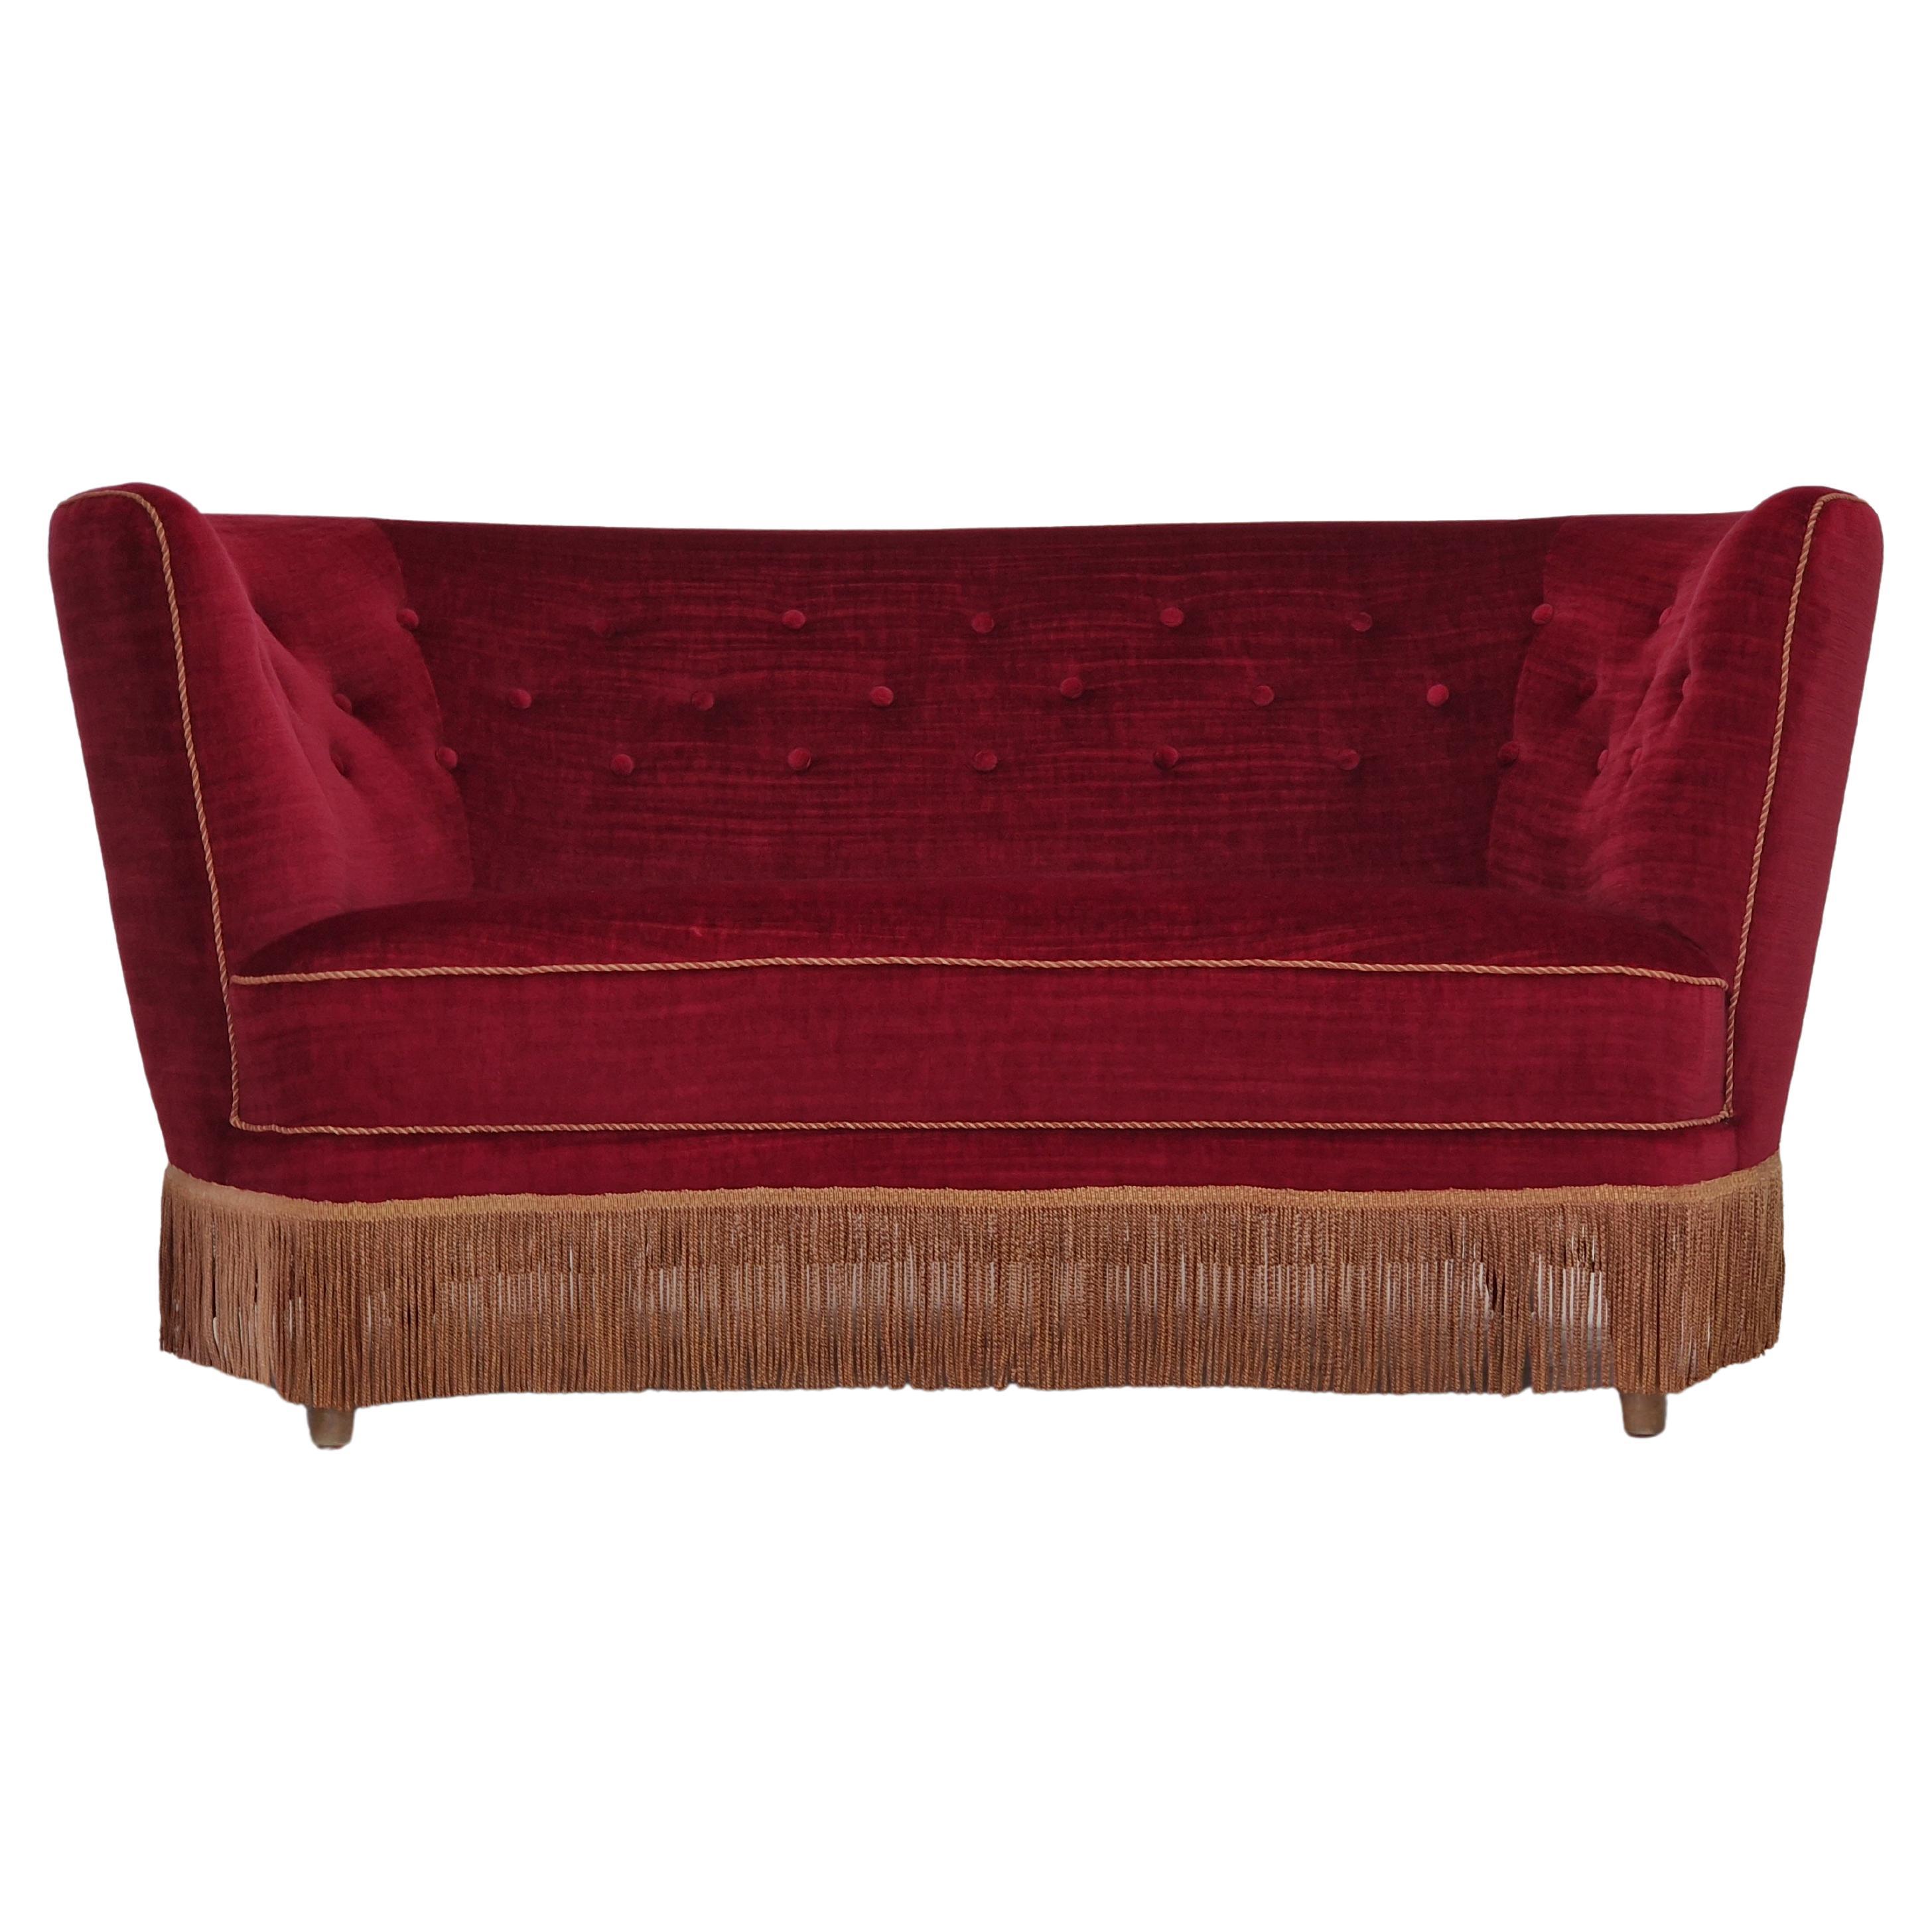 1960s, Danish Vintage 2 Seater "Banana" Sofa, Cherry-Red, Original Condition